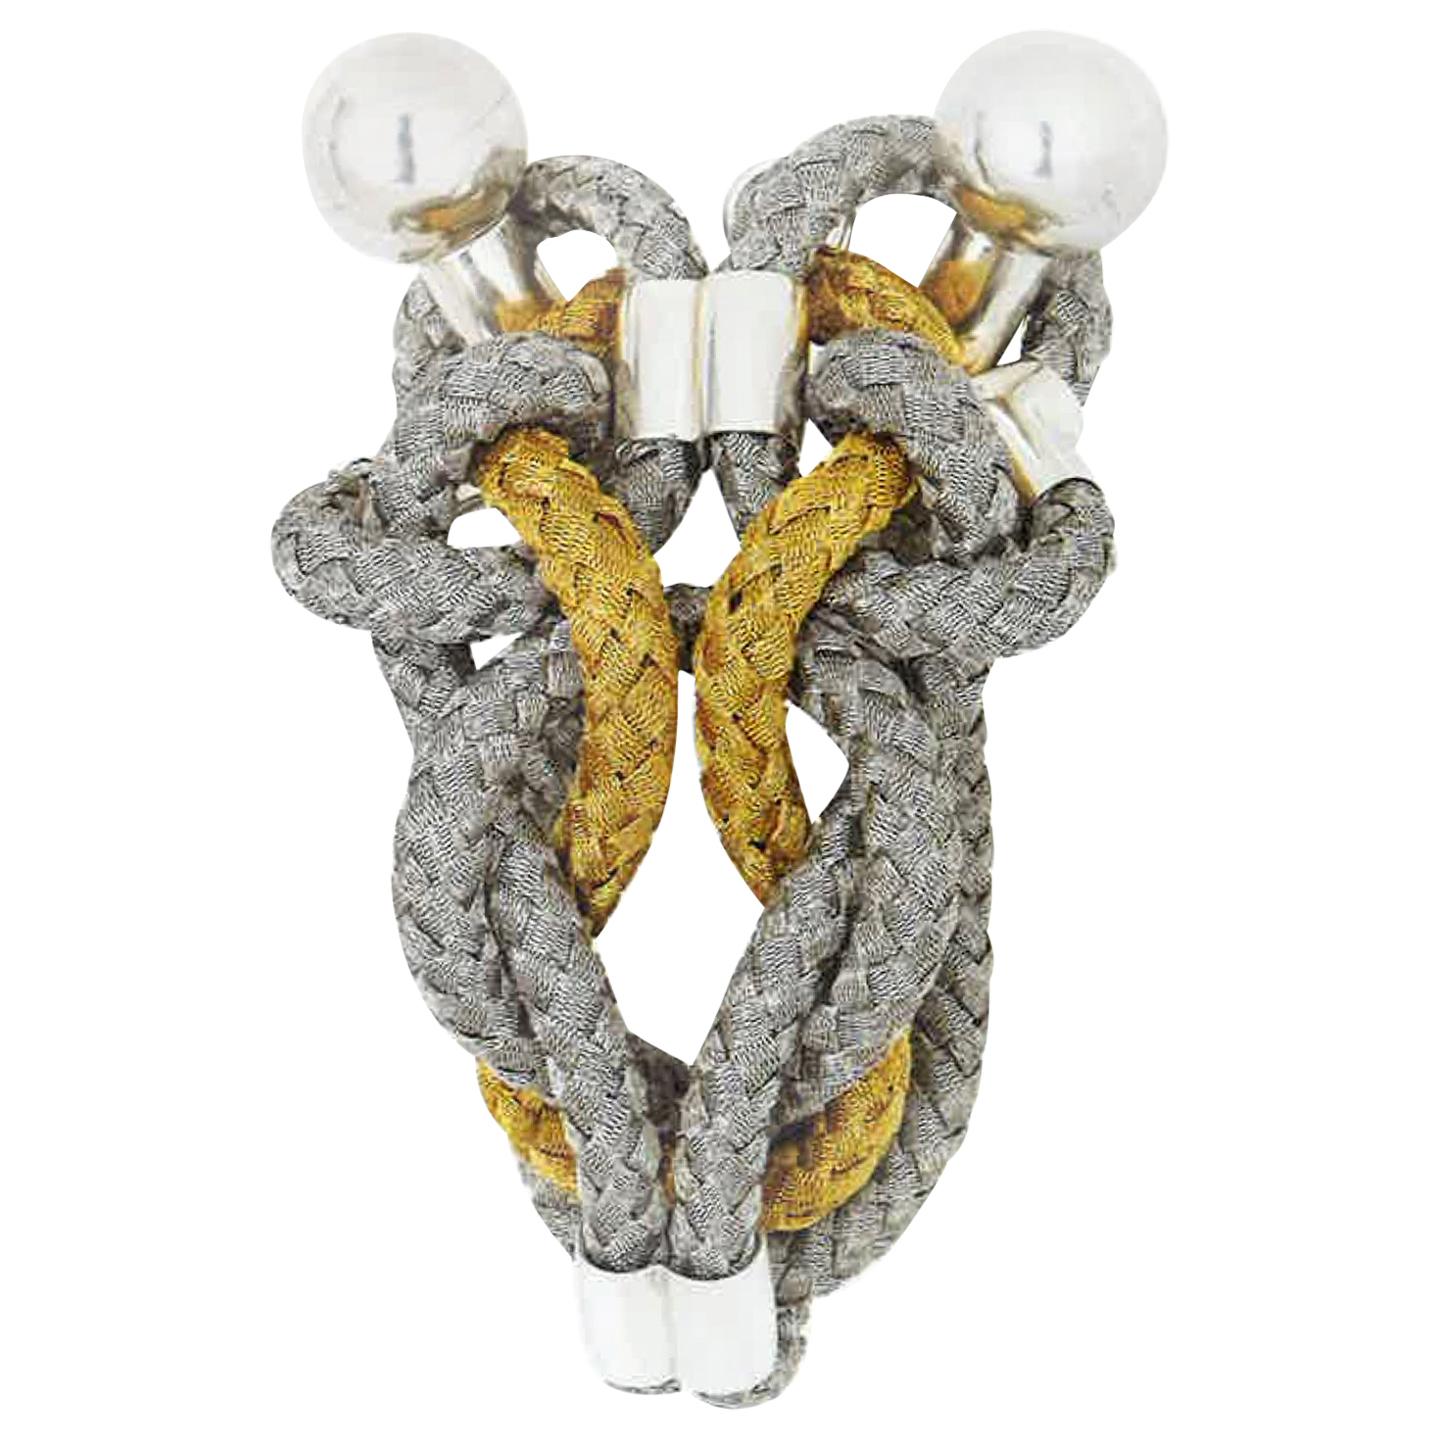 Betony Vernon "Noble Knot Bracelet" 18 Karat Gold Sterling Silver 925 in Stock For Sale